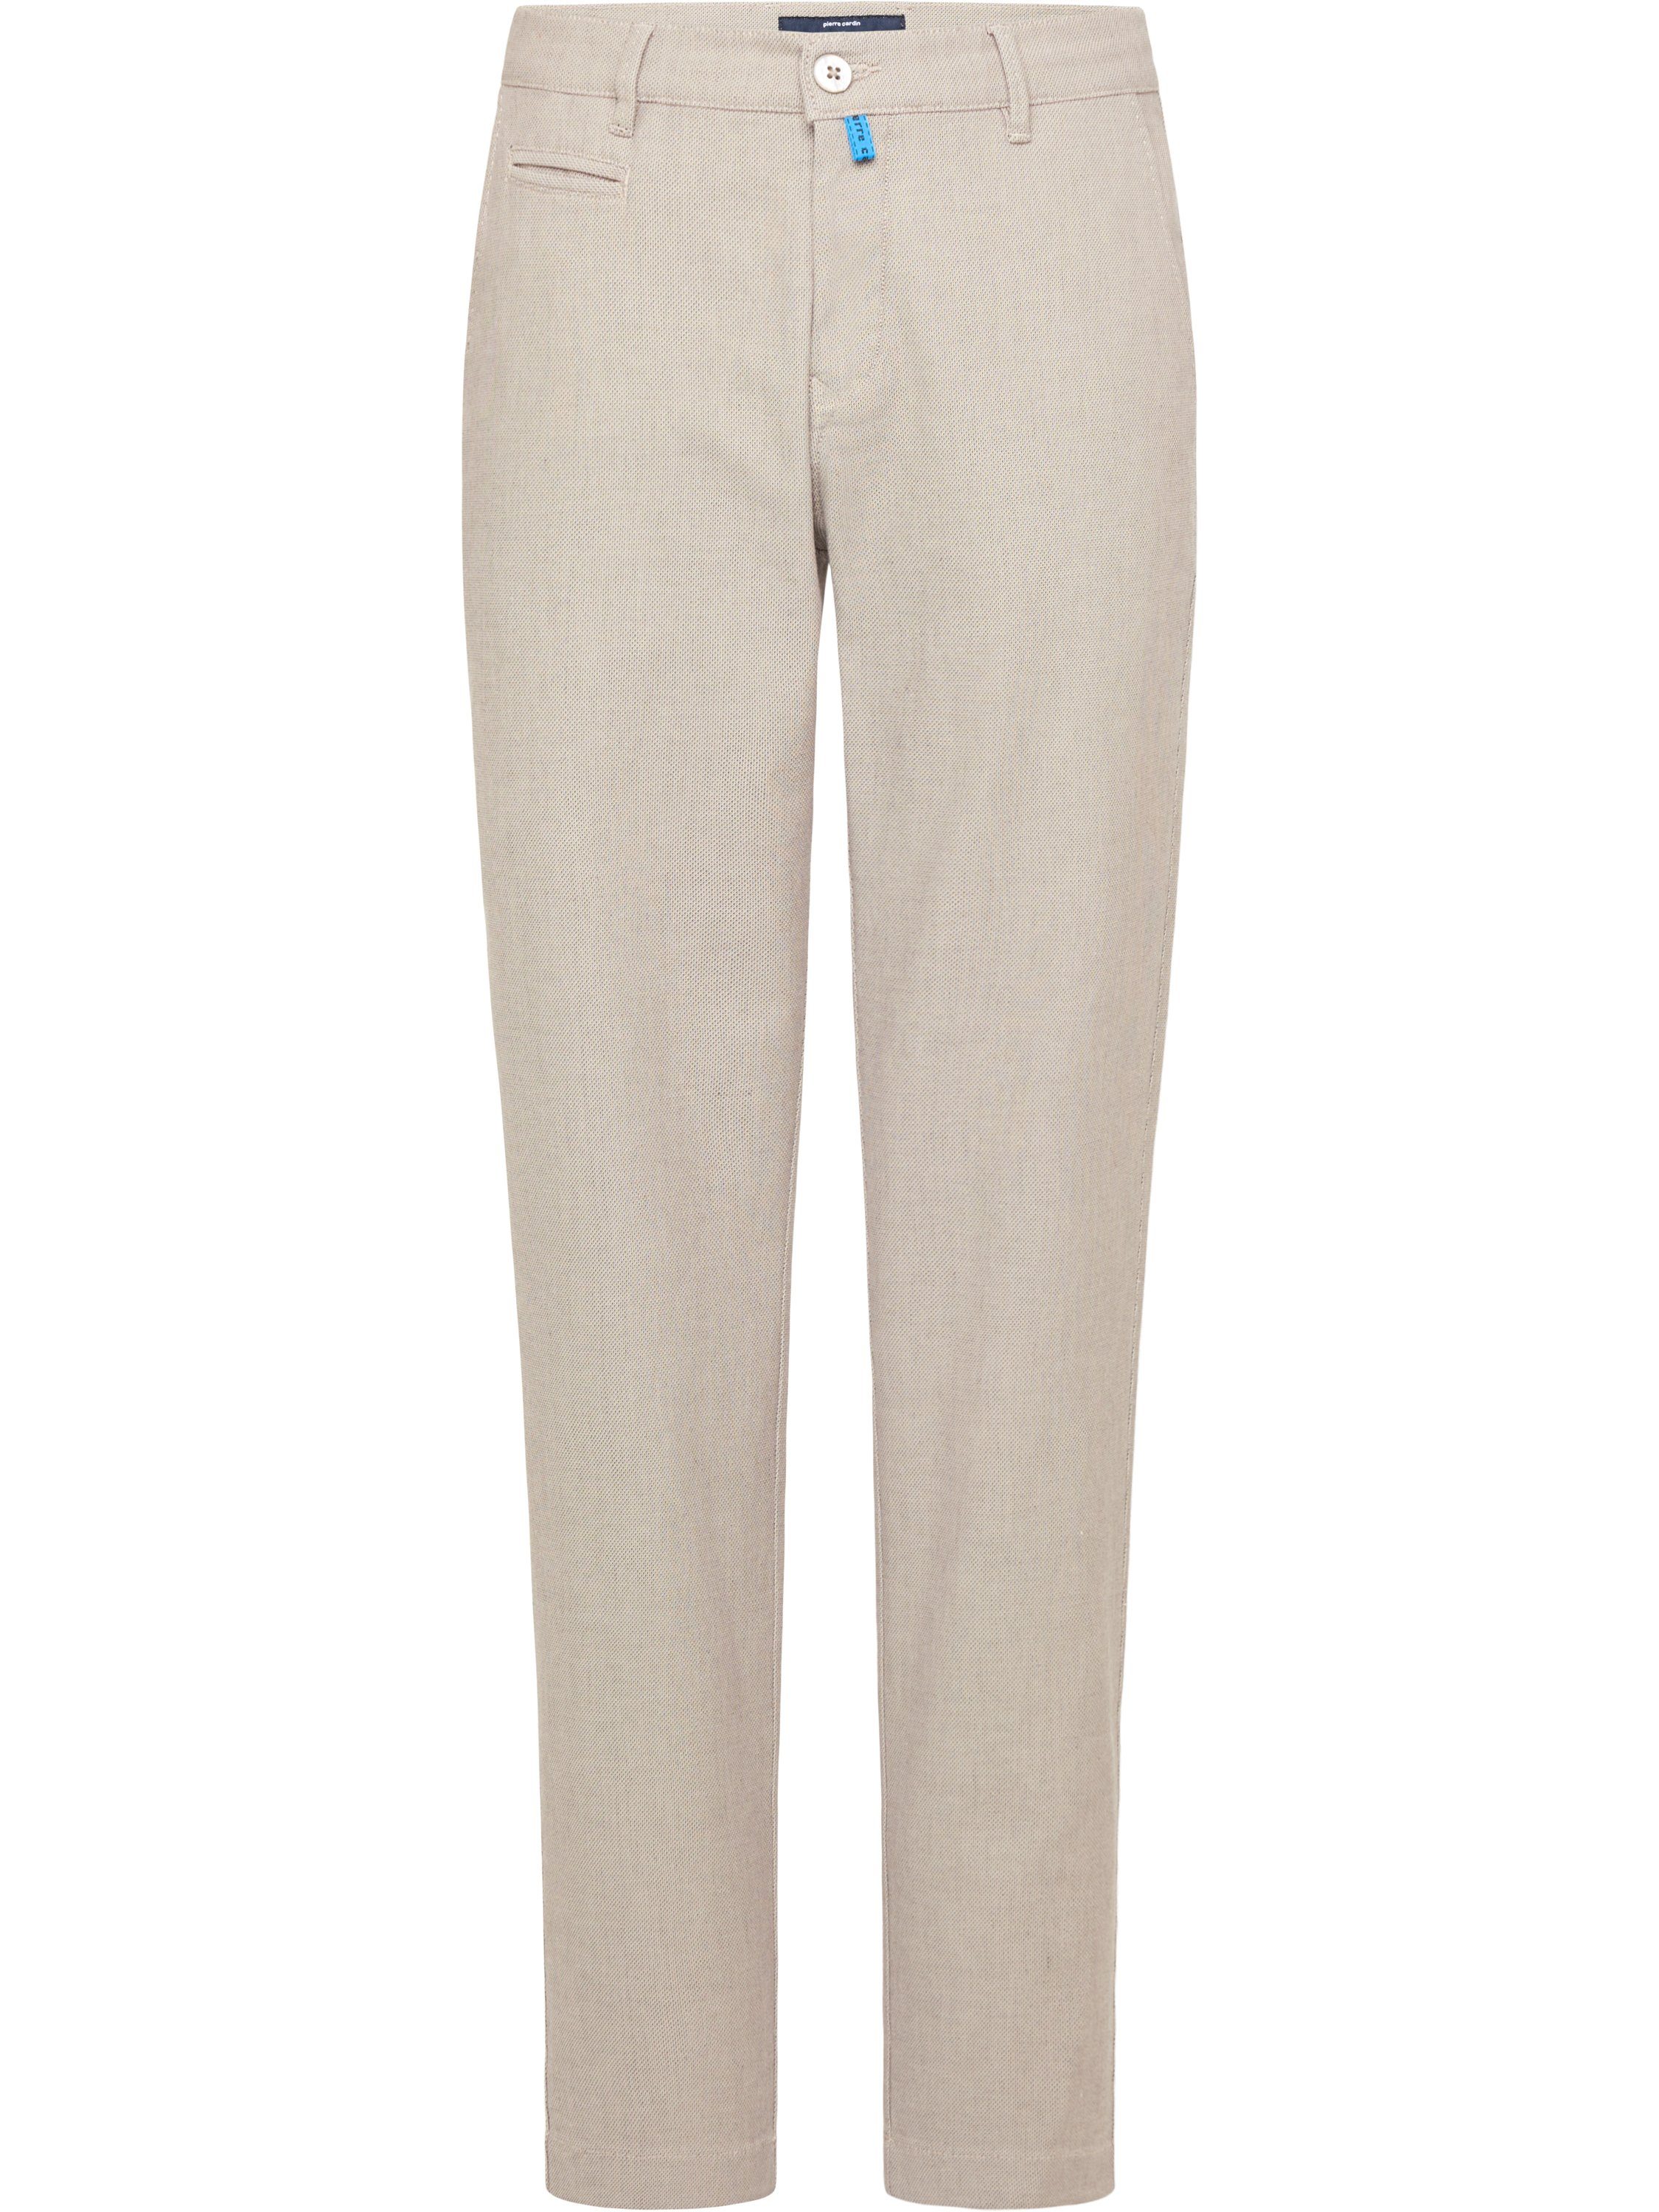 Pierre Cardin 5-Pocket-Jeans PIERRE CARDIN FUTUREFLEX CHINO LYON beige structured 33757 4000.25 25 BEIGE